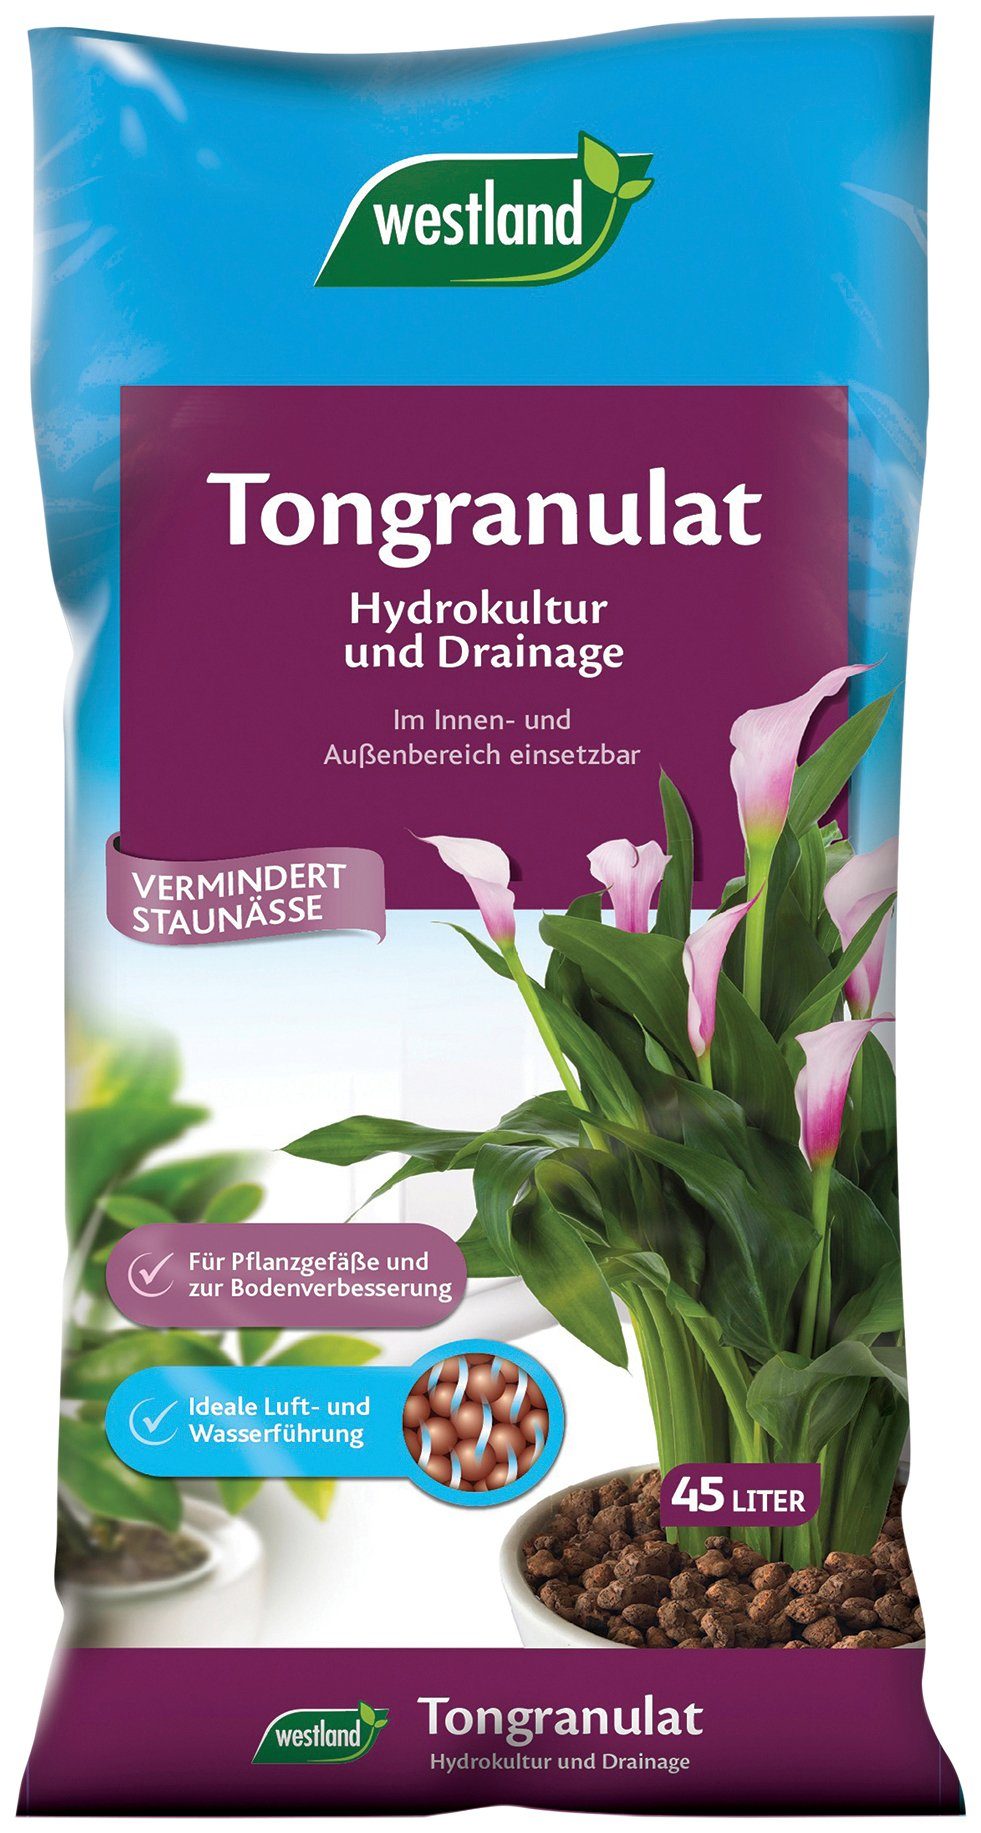 Westland Tongranulat Drainagematerial, Hydrokultur, 45 Liter online kaufen  | OTTO